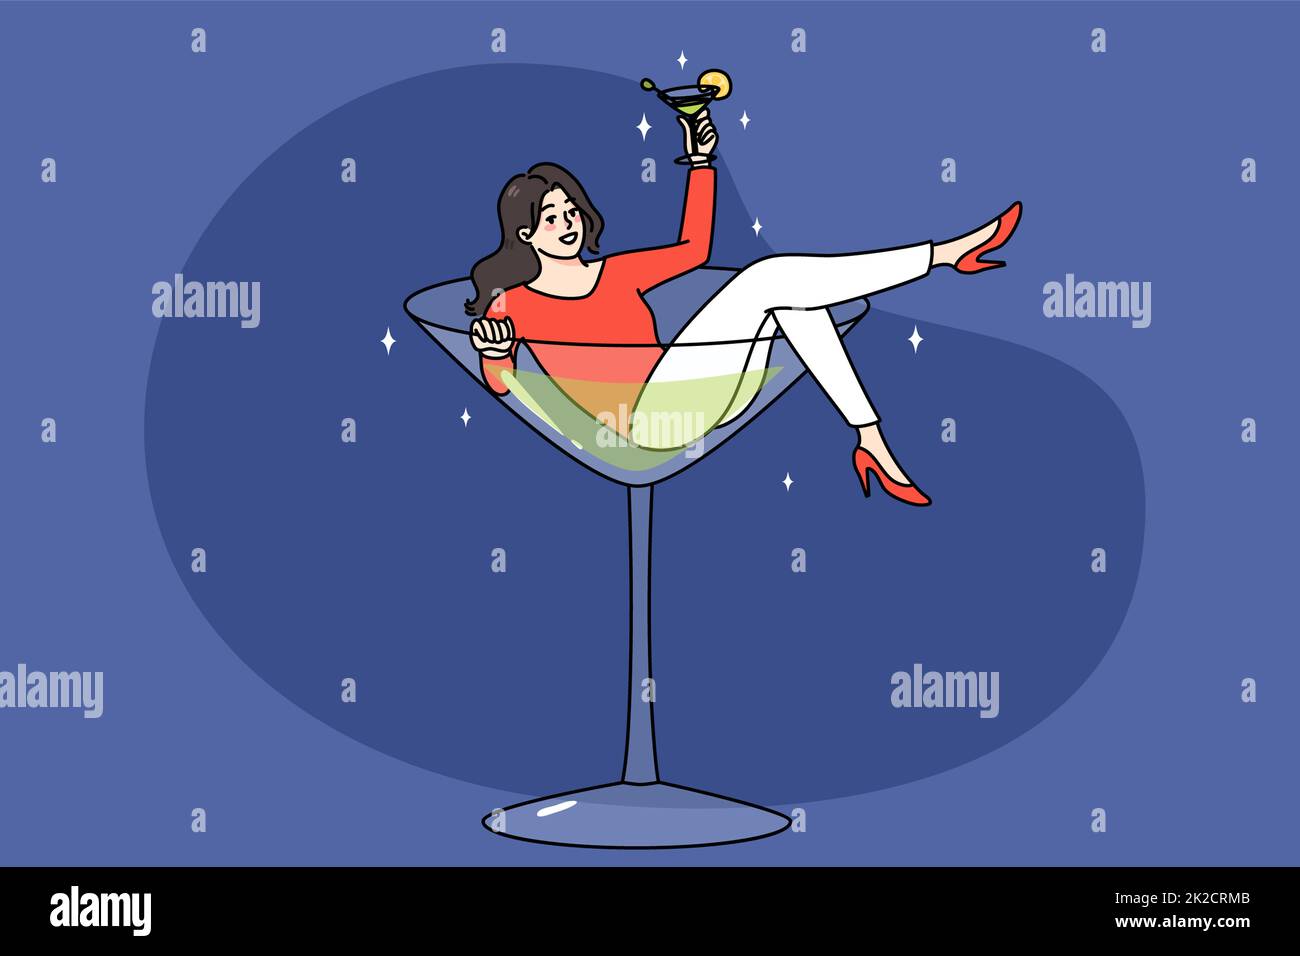 Smiling woman lying in martini glass Stock Photo